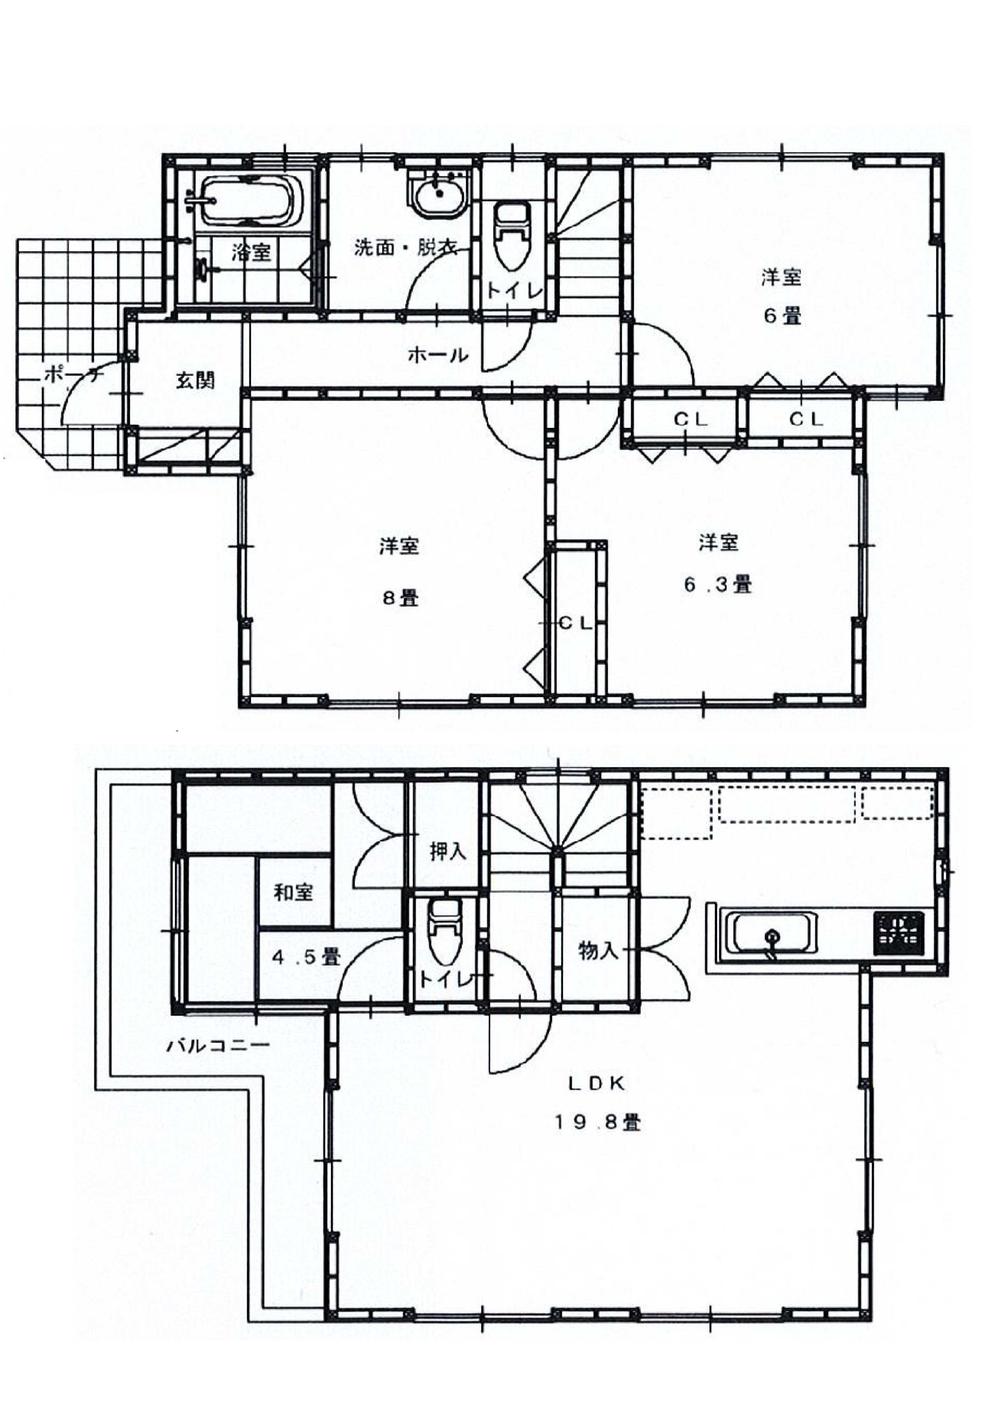 Building plan example (floor plan). Building plan example (Building 3) 3LDK, Land price 20,300,000 yen, Land area 107.21 sq m , Building price 15 million yen, Building area 100.6 sq m